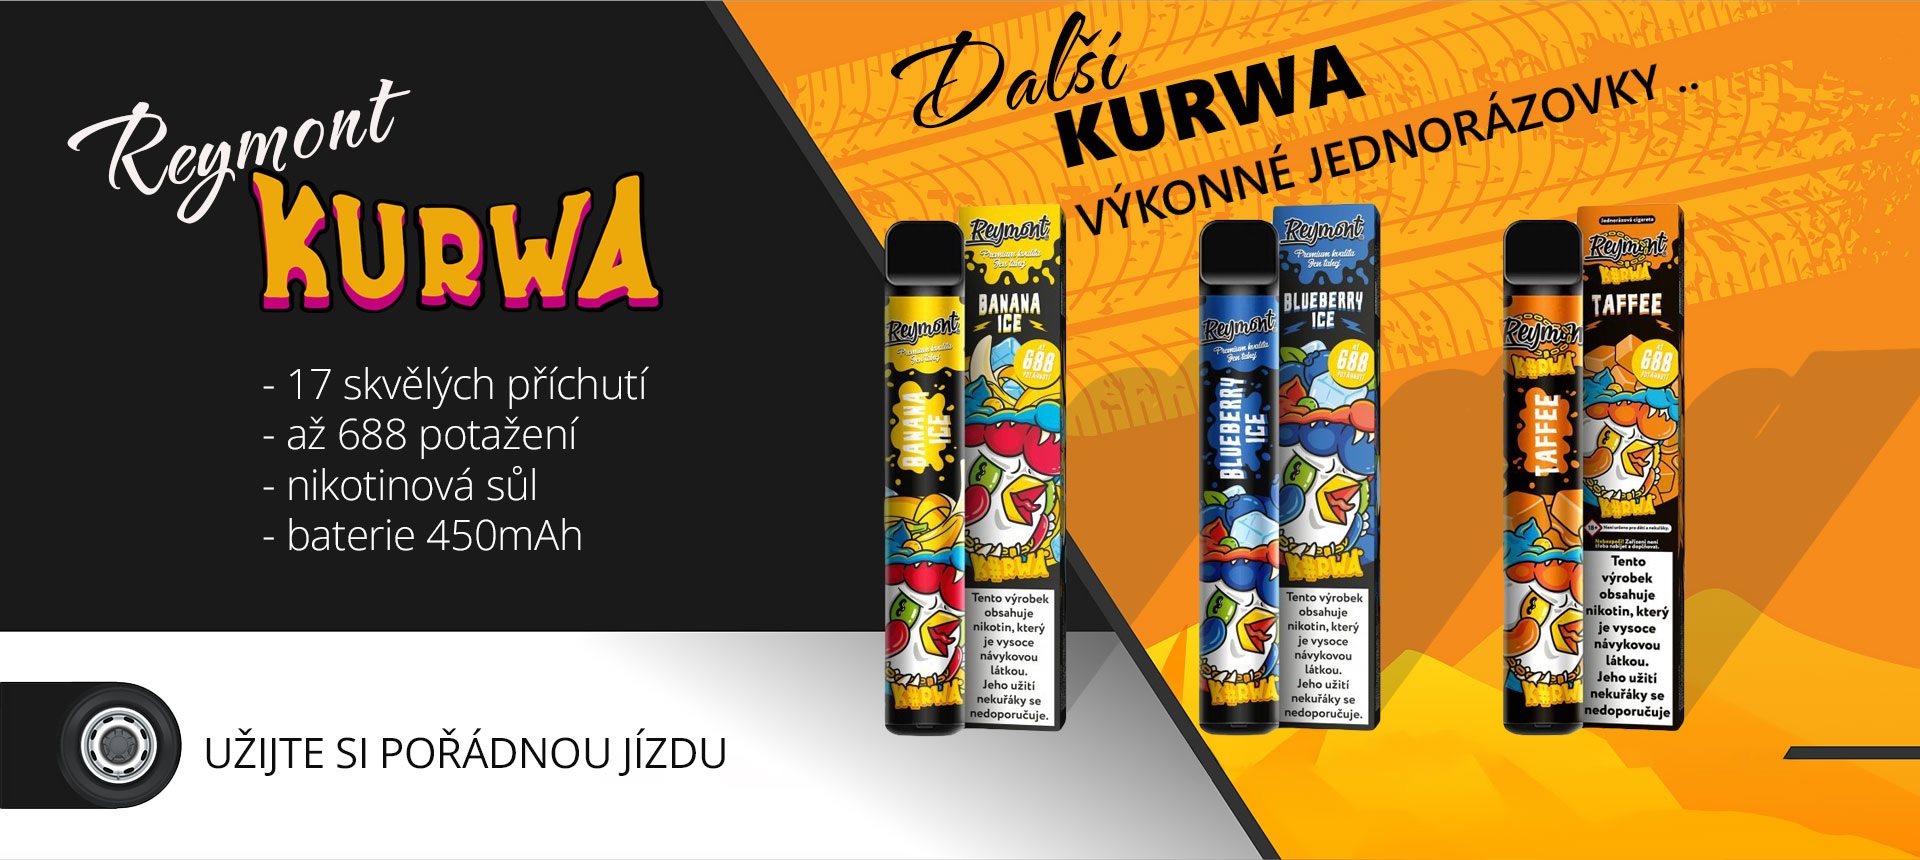 jednorazove-e-cigarety-kurwa-reymont-20mg-688-potazeni